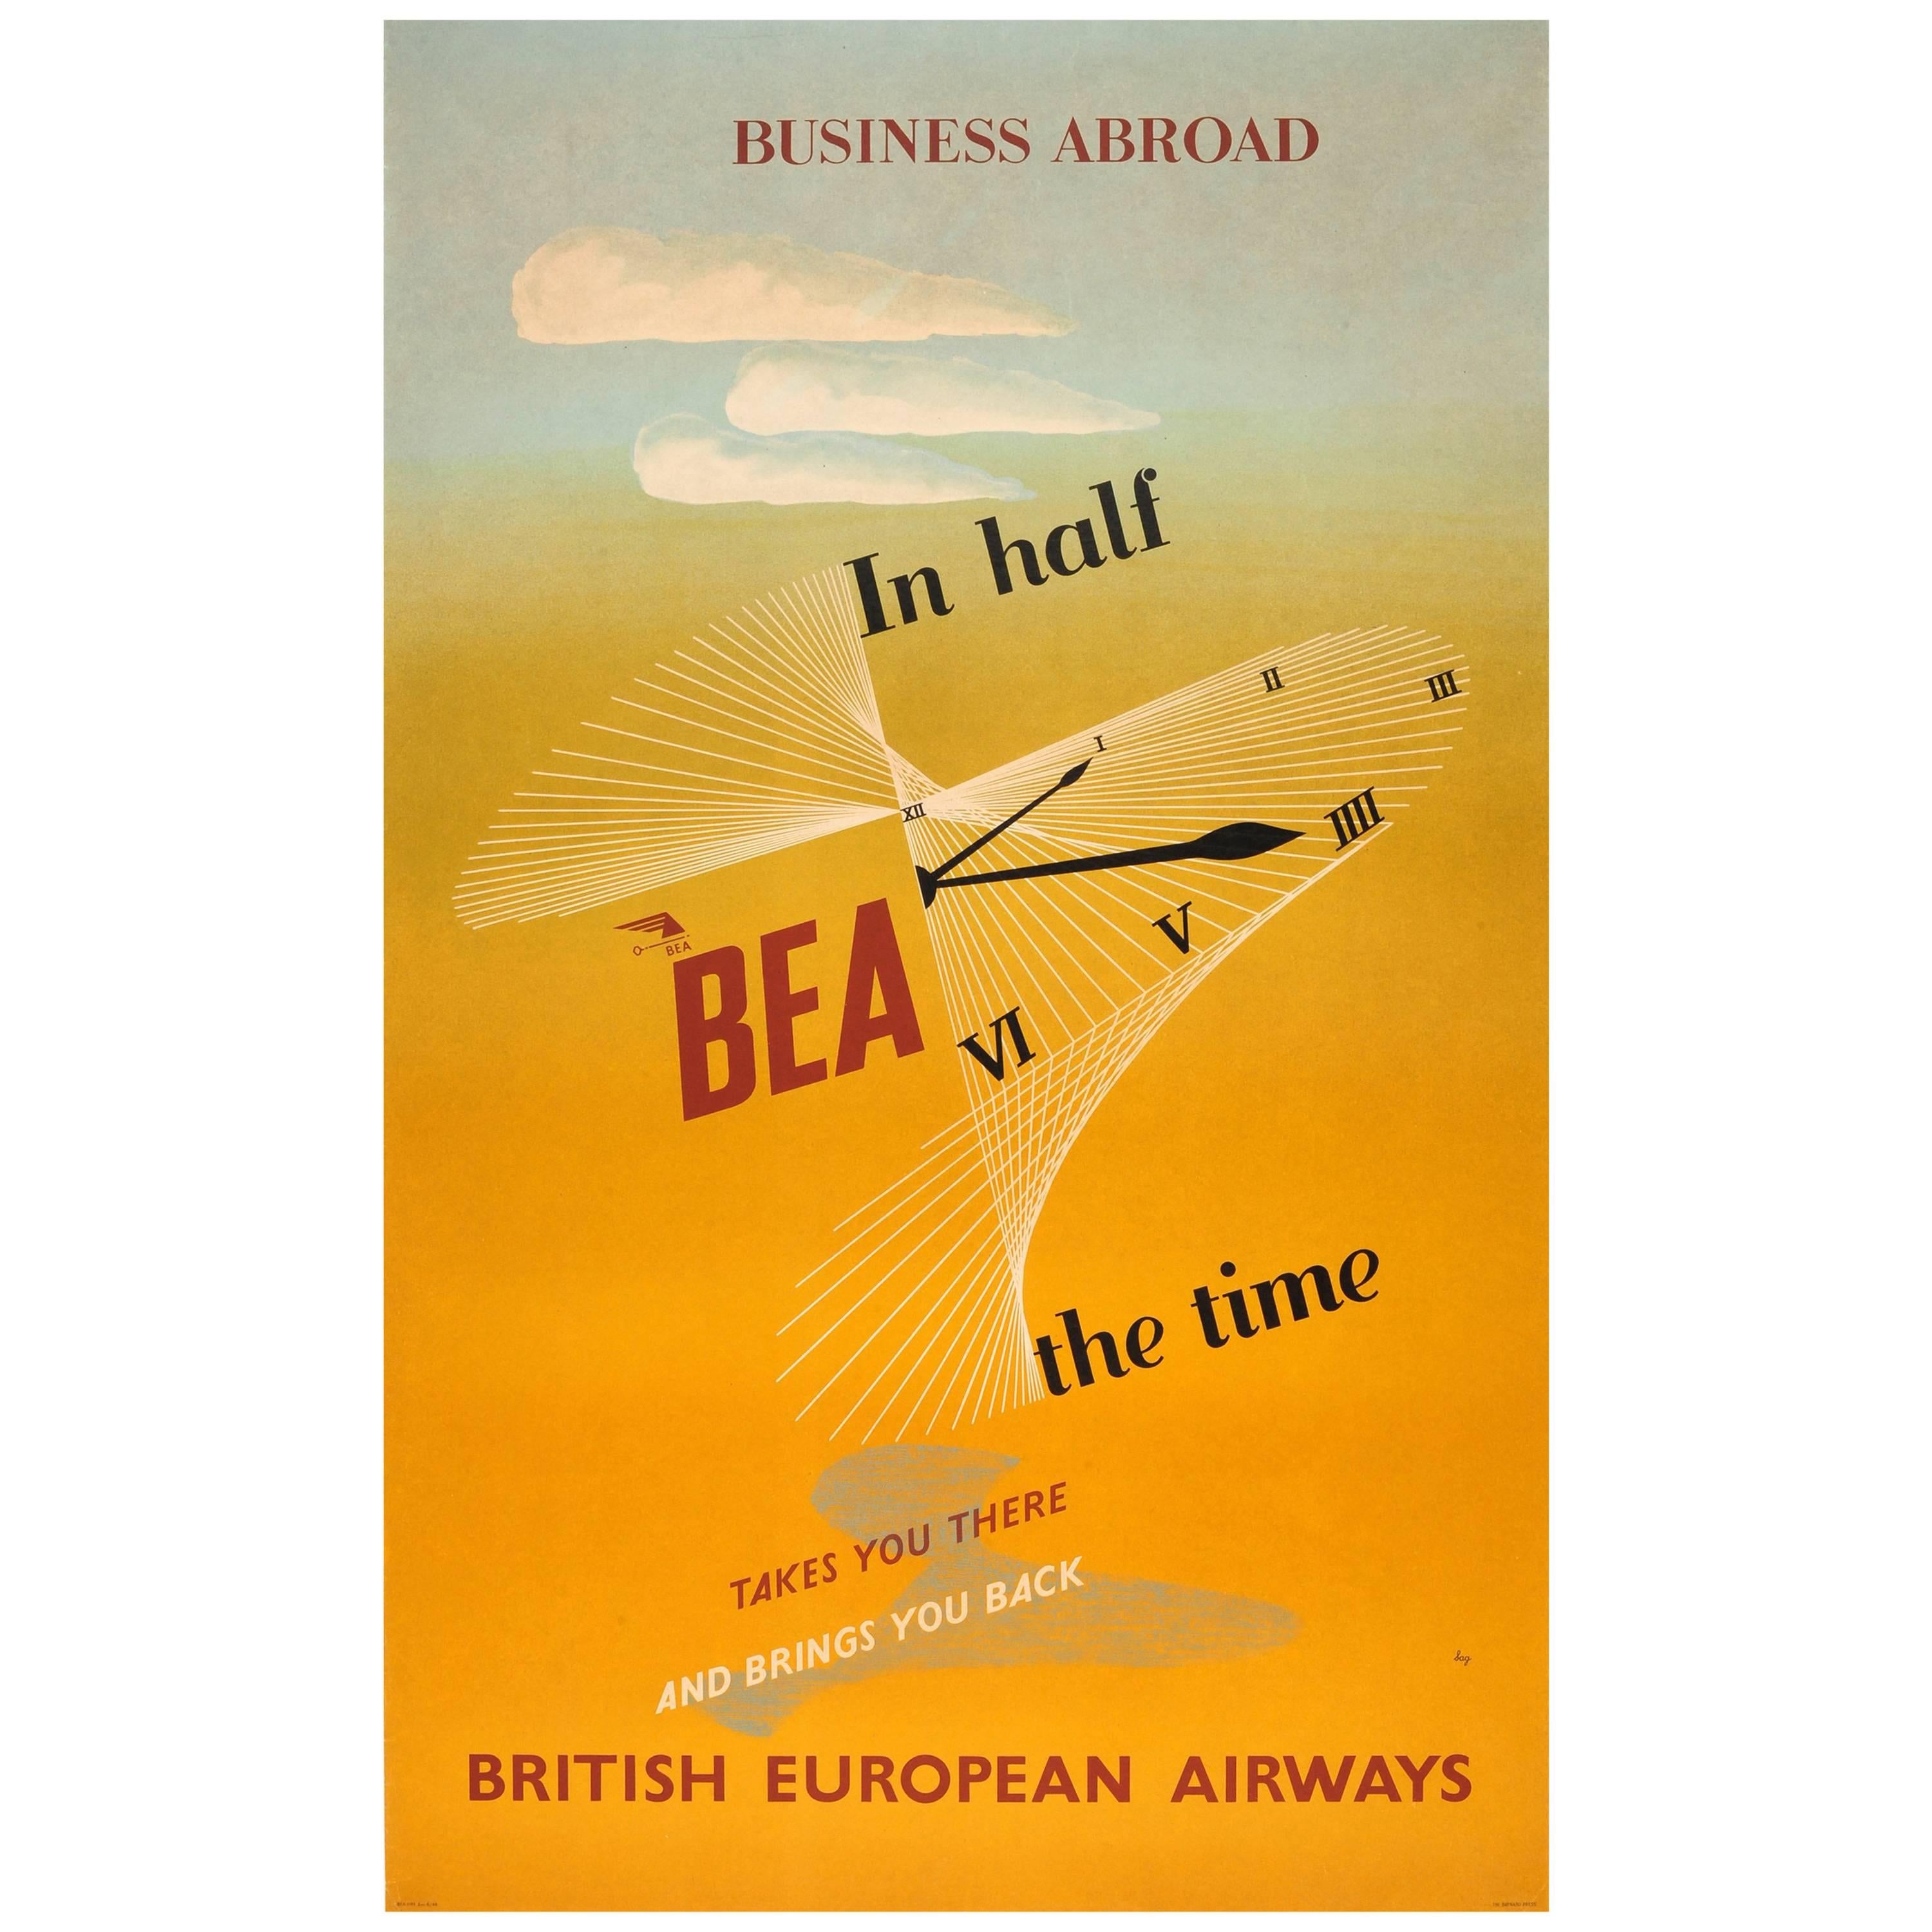 Original Vintage Midcentury British European Airways Poster for Business Abroad For Sale